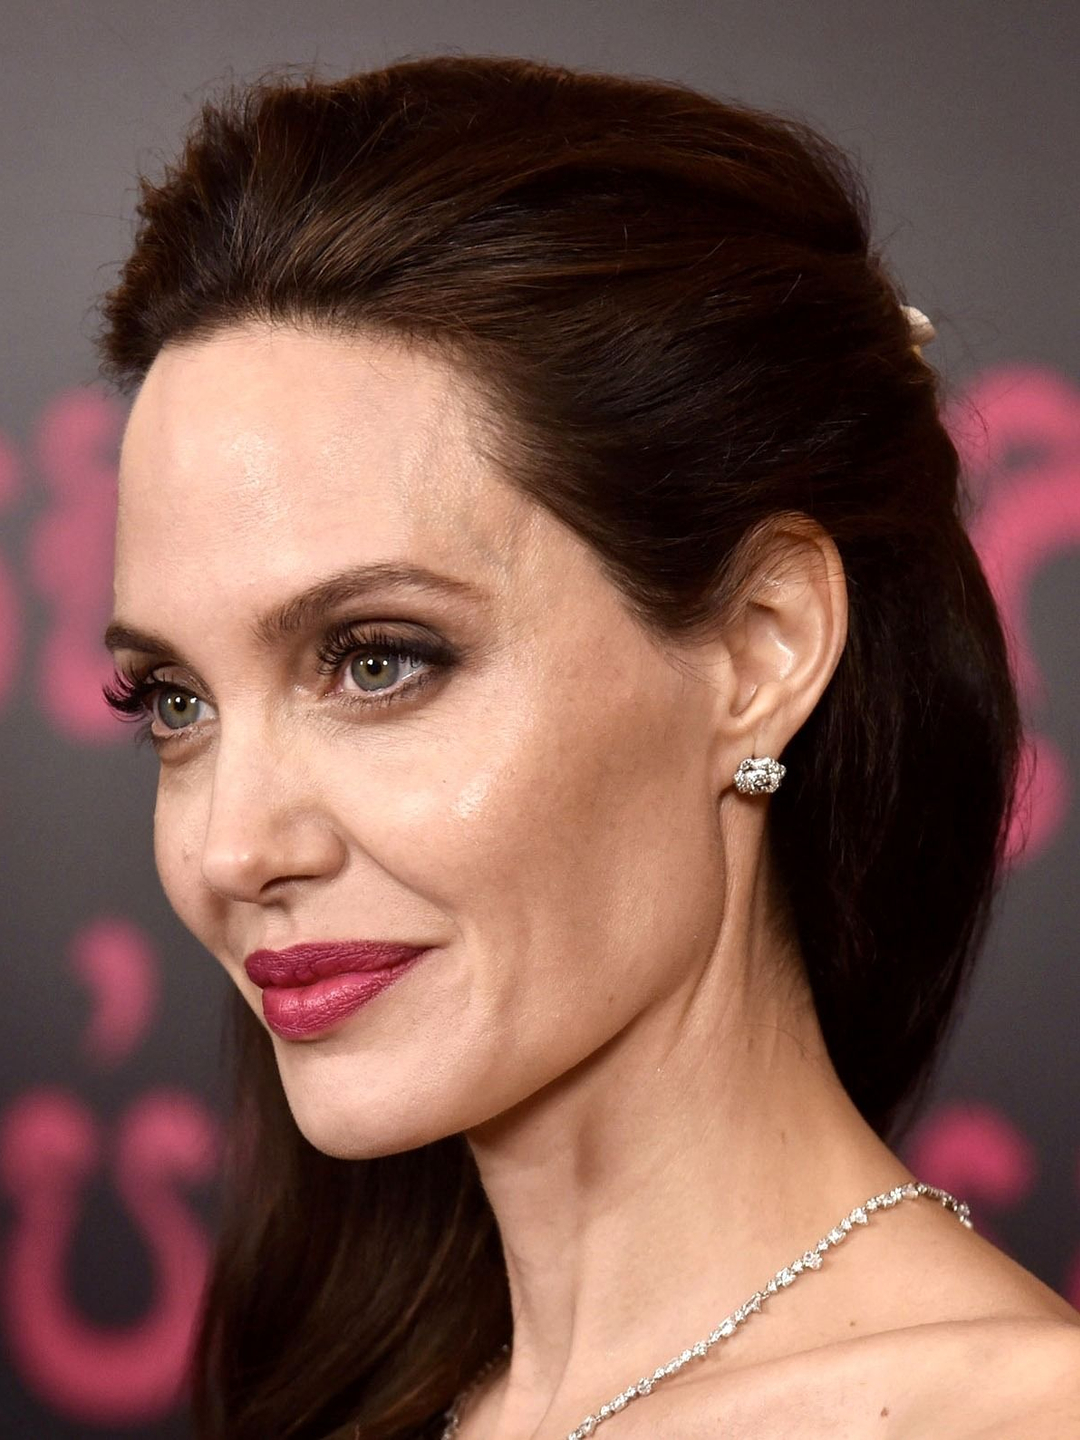 Angelina Jolie early career